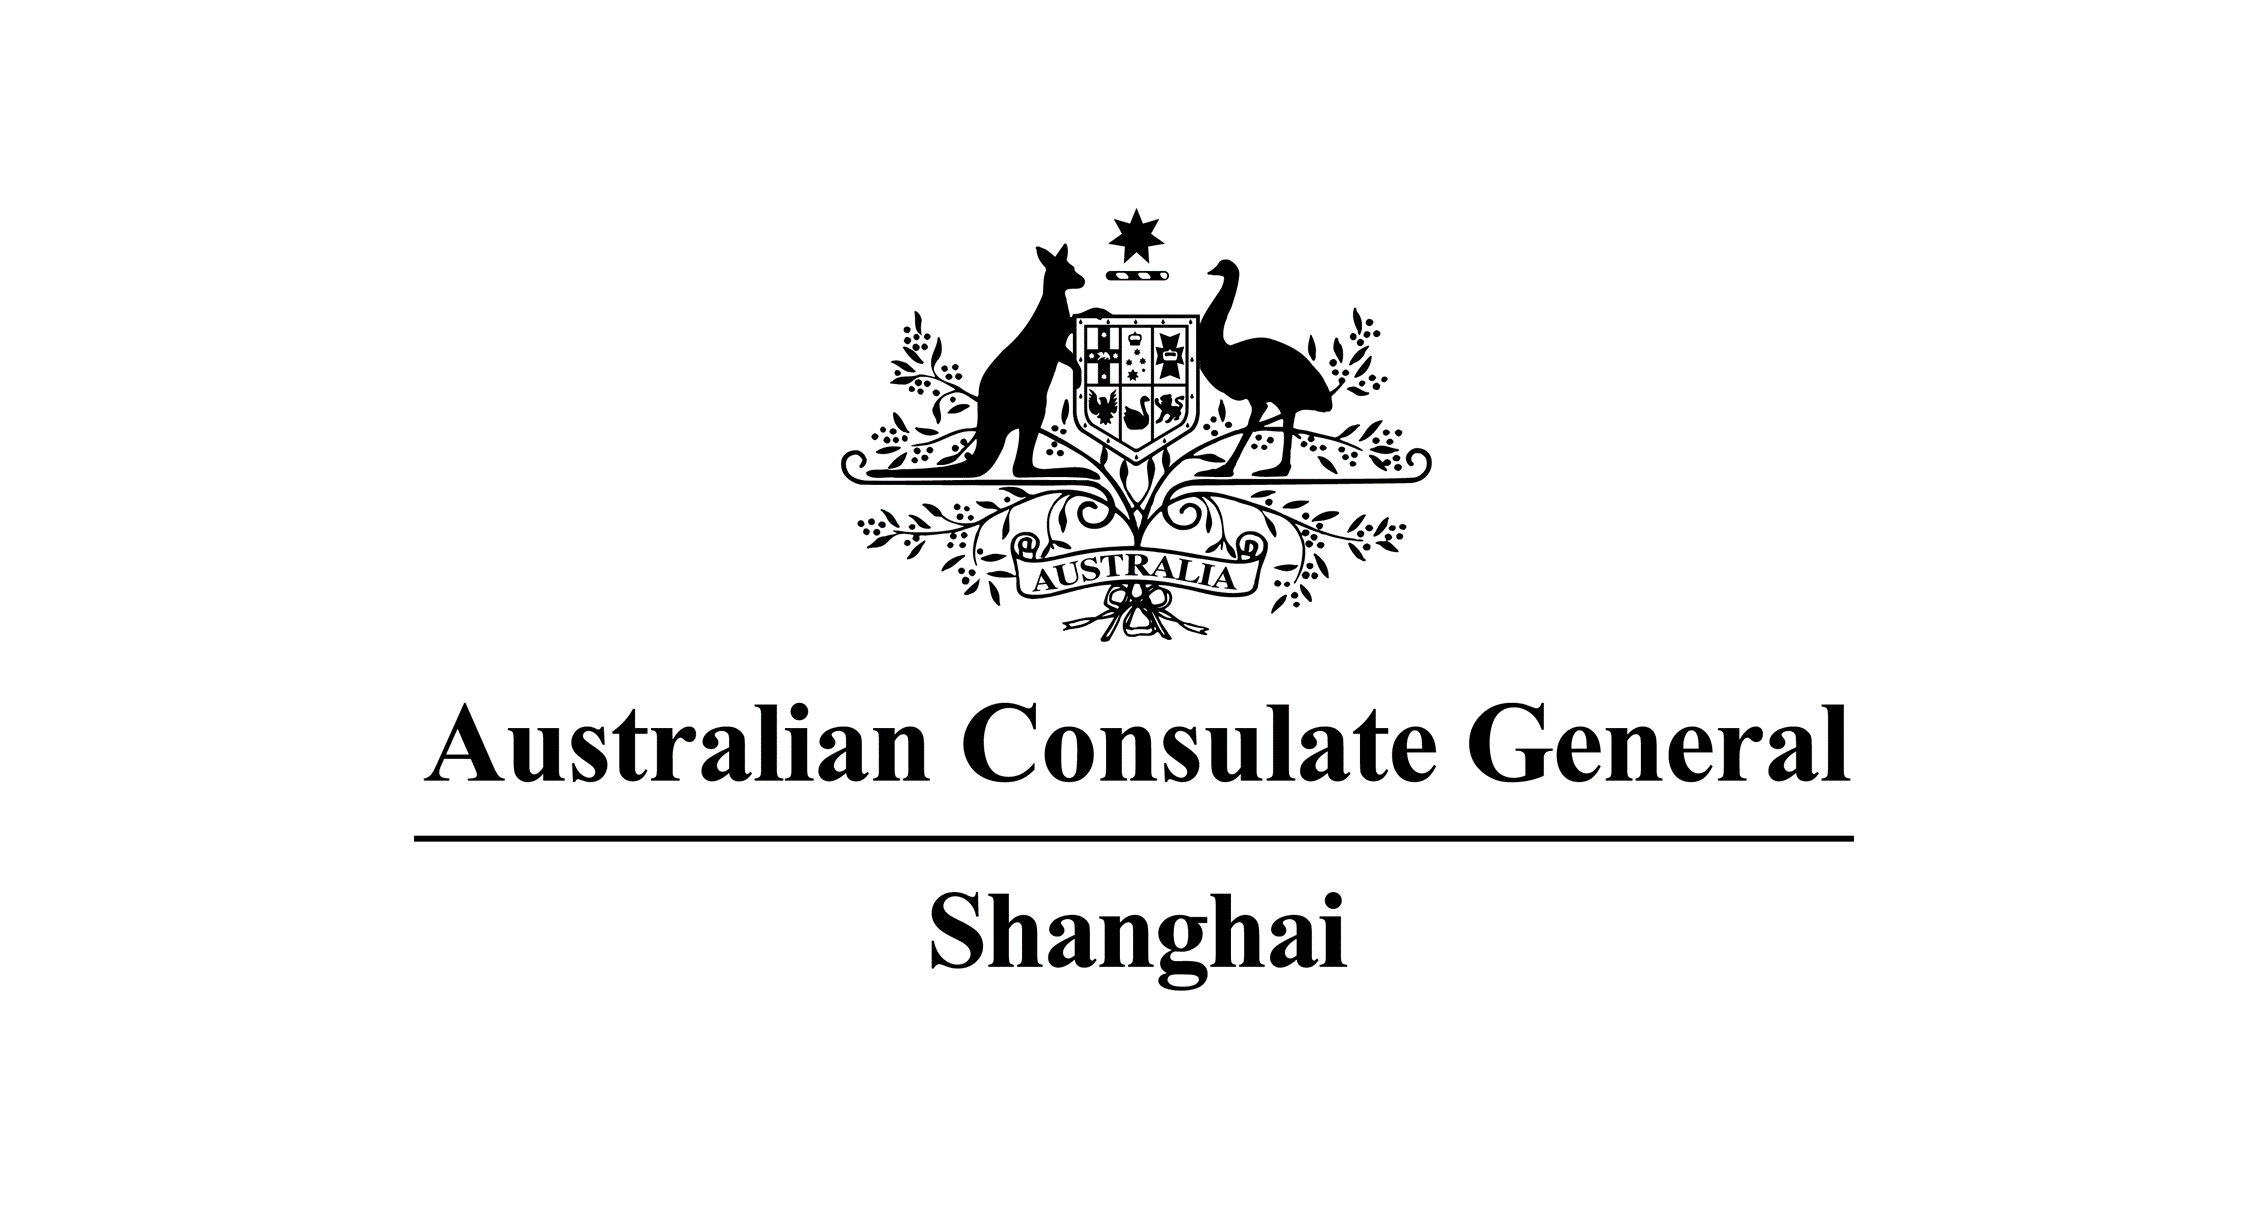 澳大利亚总领事馆 Australian Consulate-General